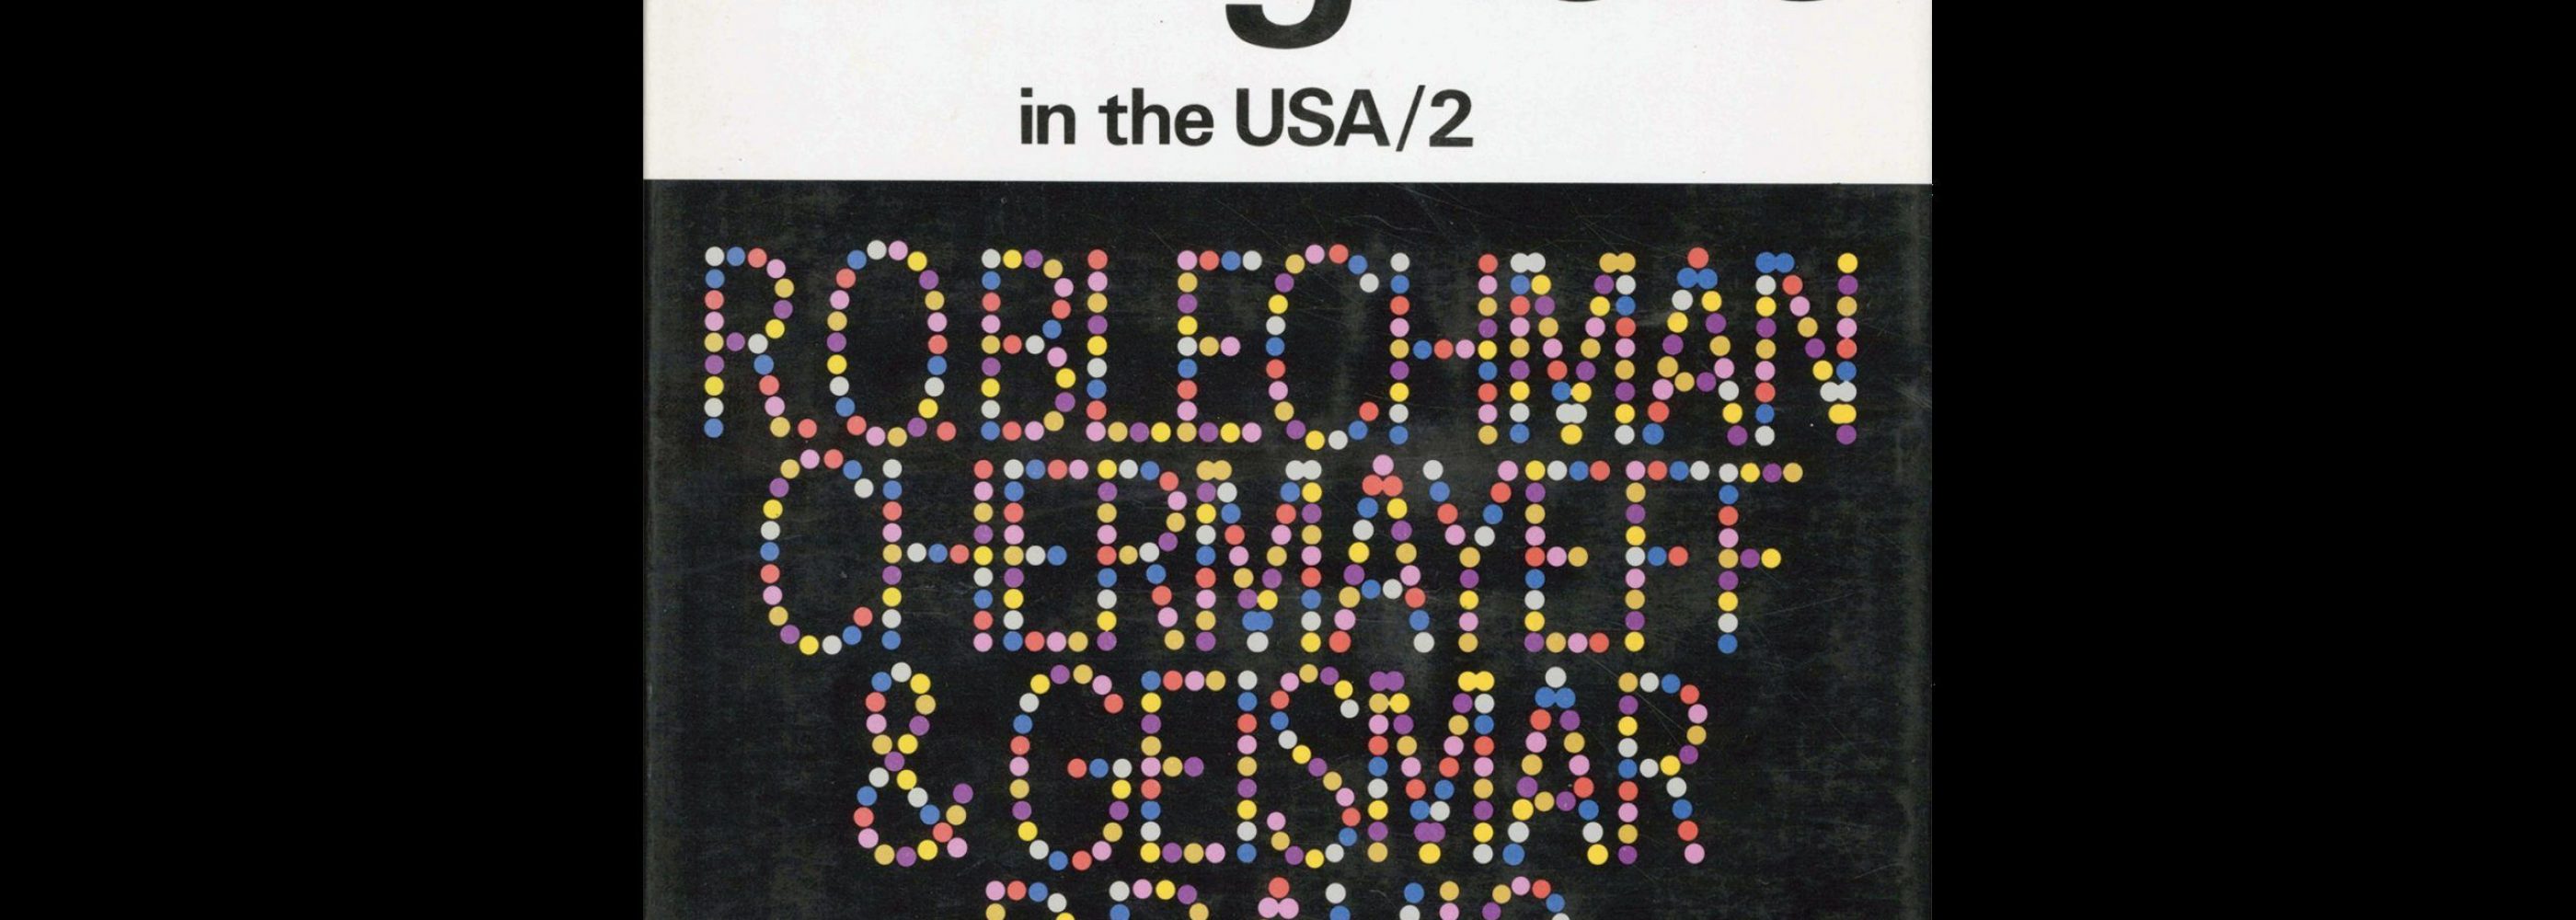 Graphic Designers in the USA, Volume 2, 1971